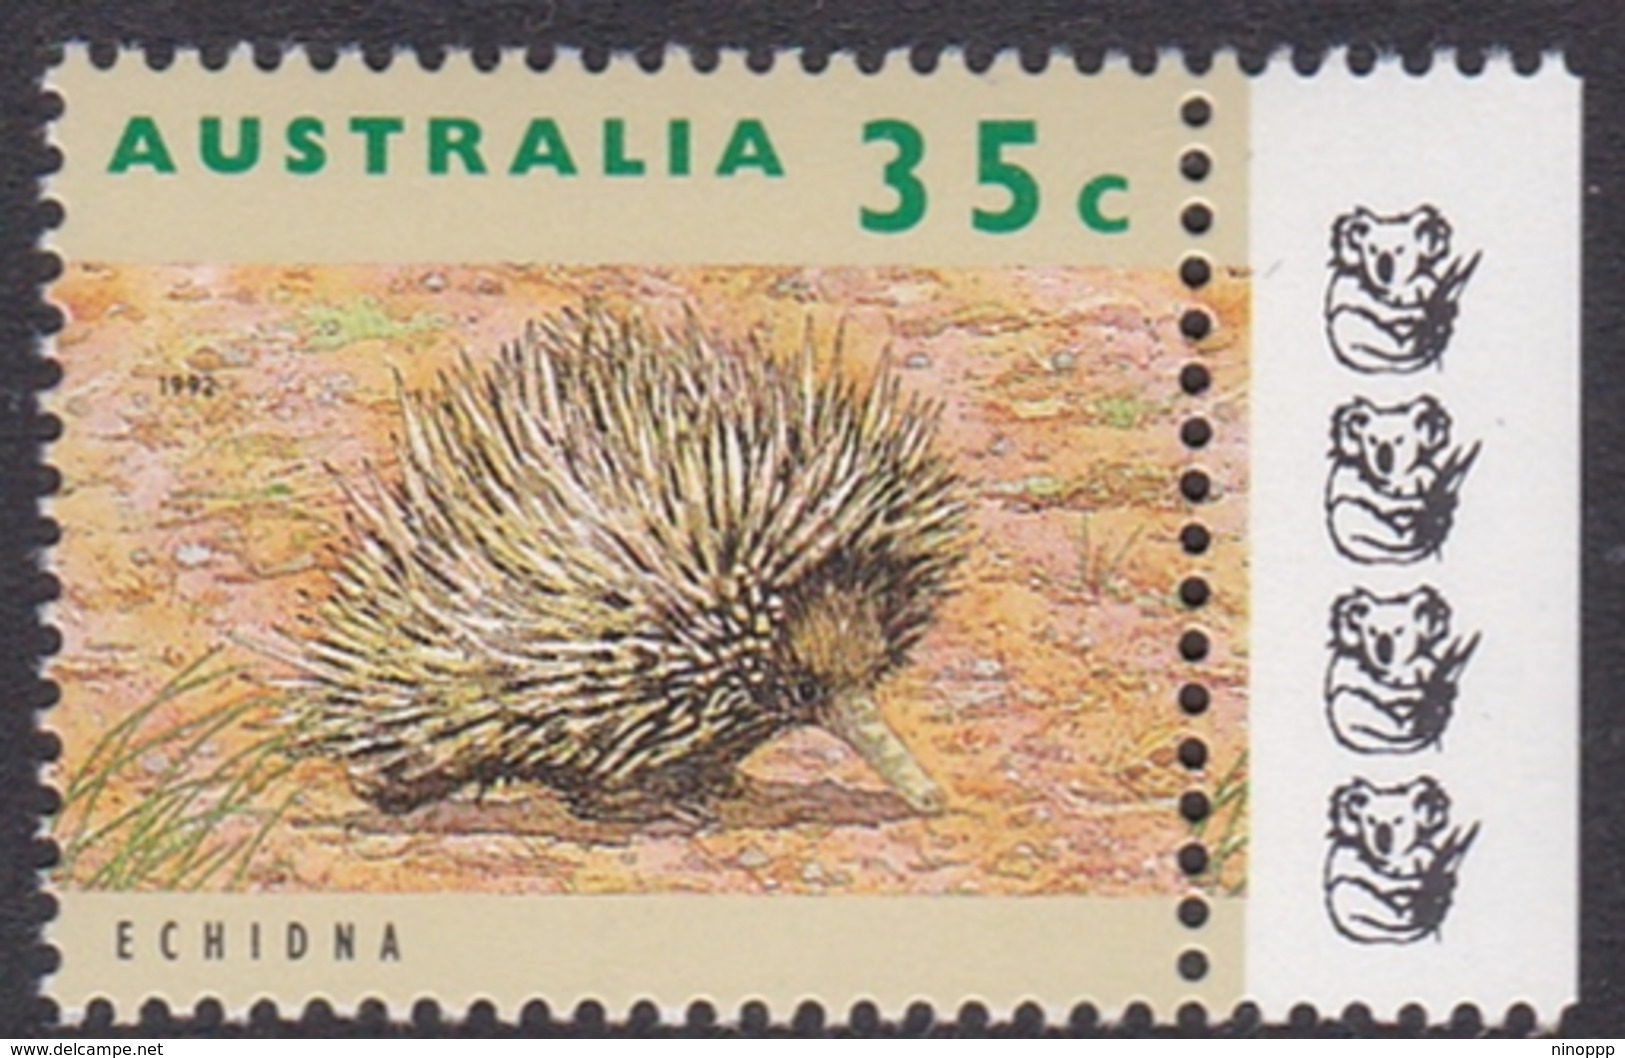 Australia ASC 1358d 1992 Australian Wildlife 35c Echidna, 4 Koalas Reprint, Mint Never Hinged - Proofs & Reprints